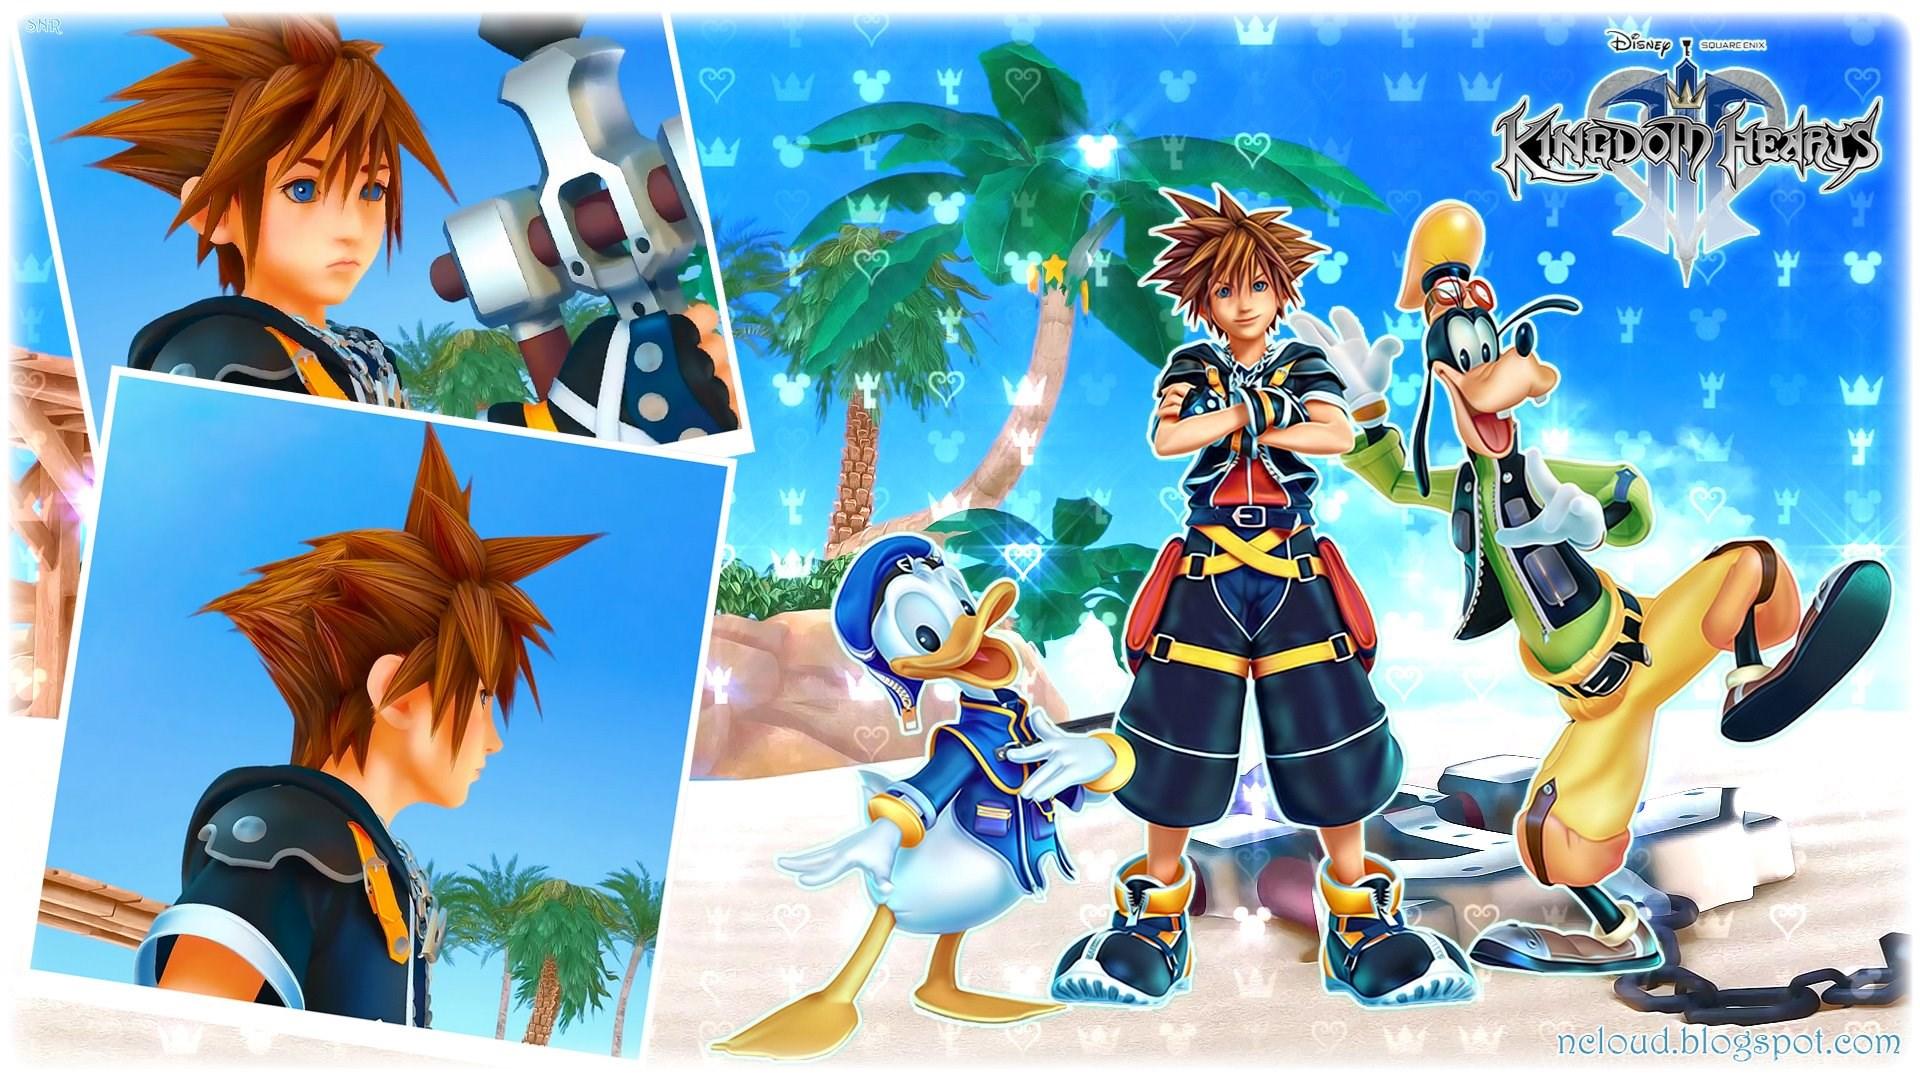 Games Movies Music Anime: My Kingdom Hearts 3 Wallpaper Desktop